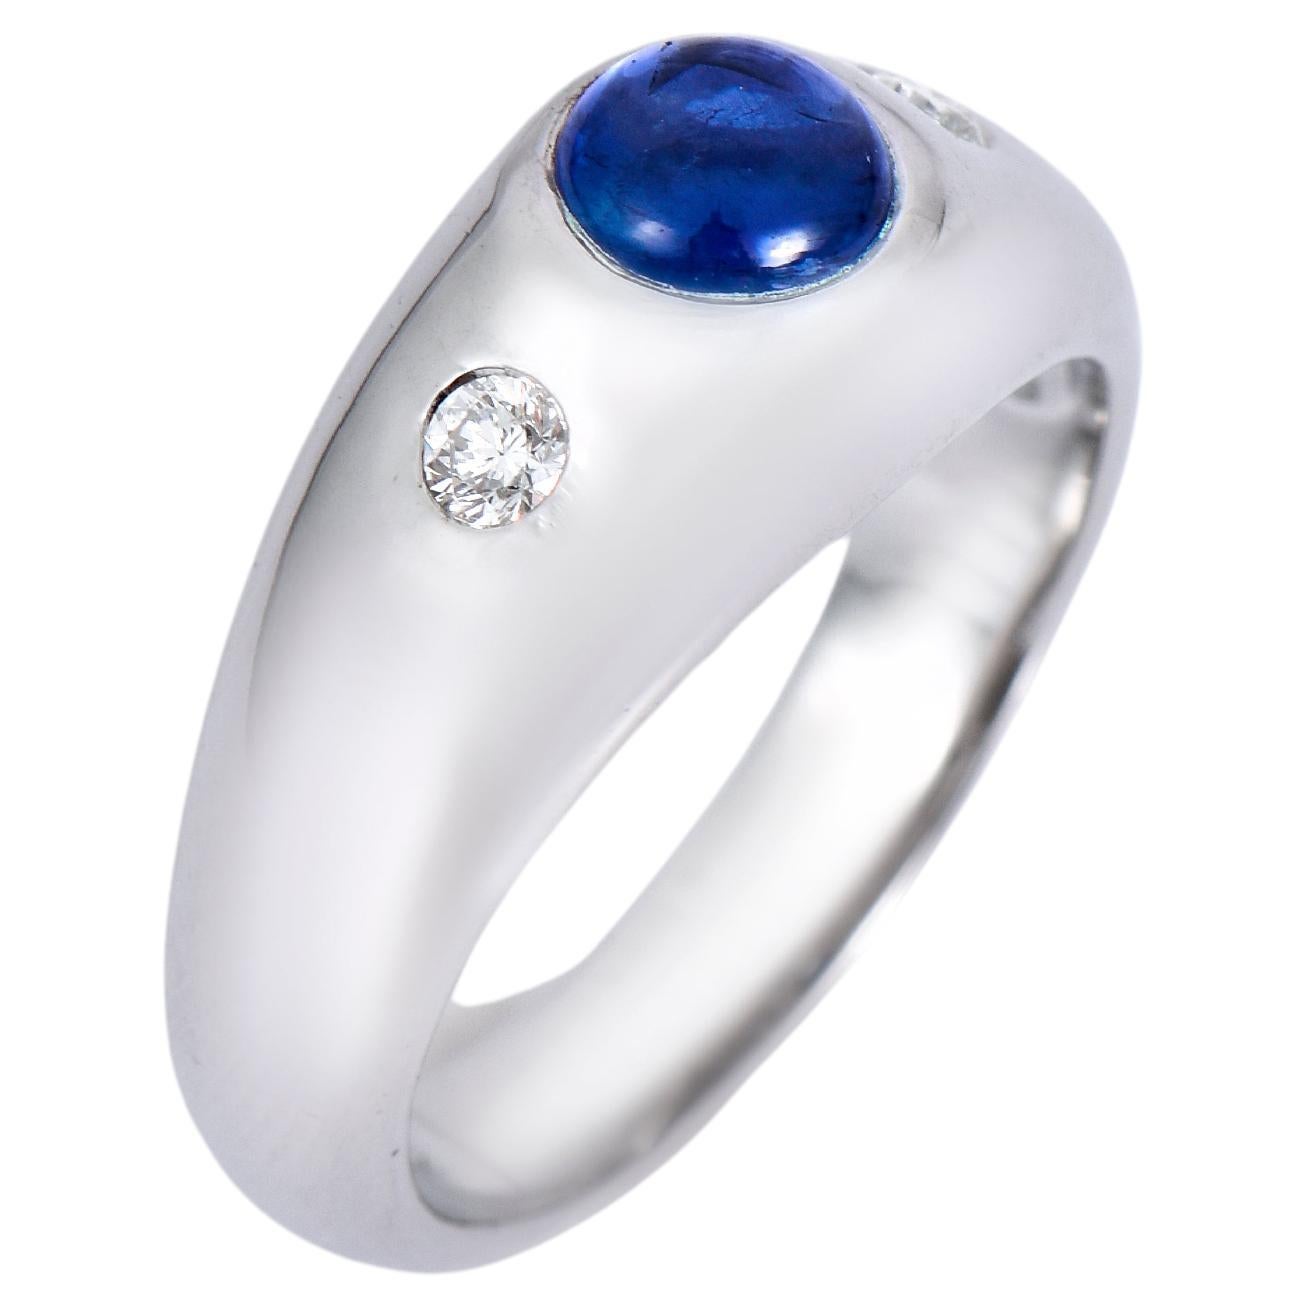 Orloff of Denmark, 1 ct Blue Sapphire Diamond Silver Ring